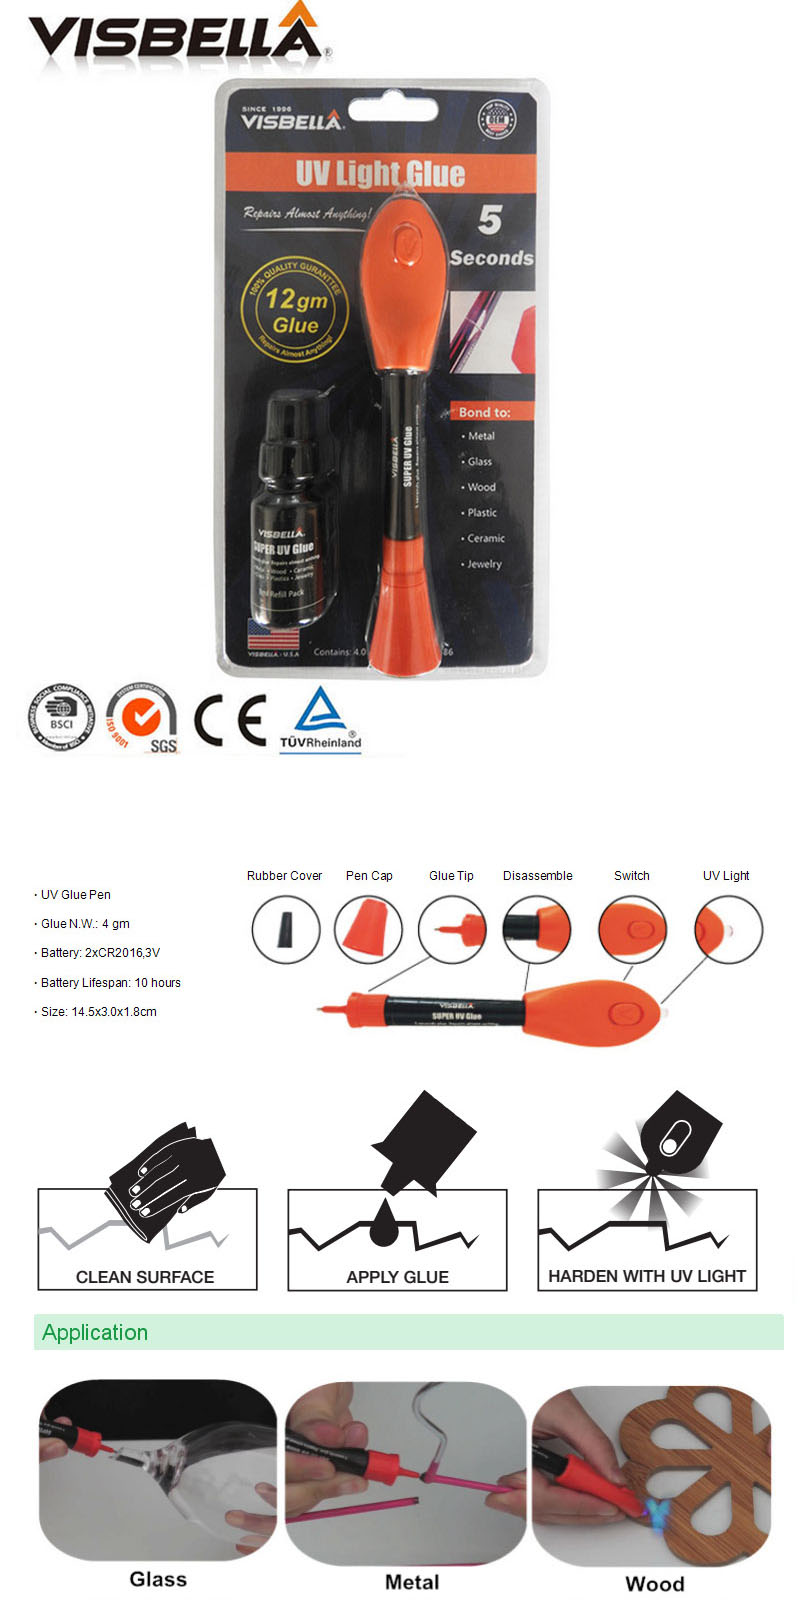 Visbella-Universal-5-Seconds-Fix-UV-Light-Glue-Plastic-Welding-Glue-Quickly-Seal-and-Repair-with-8g--1225377